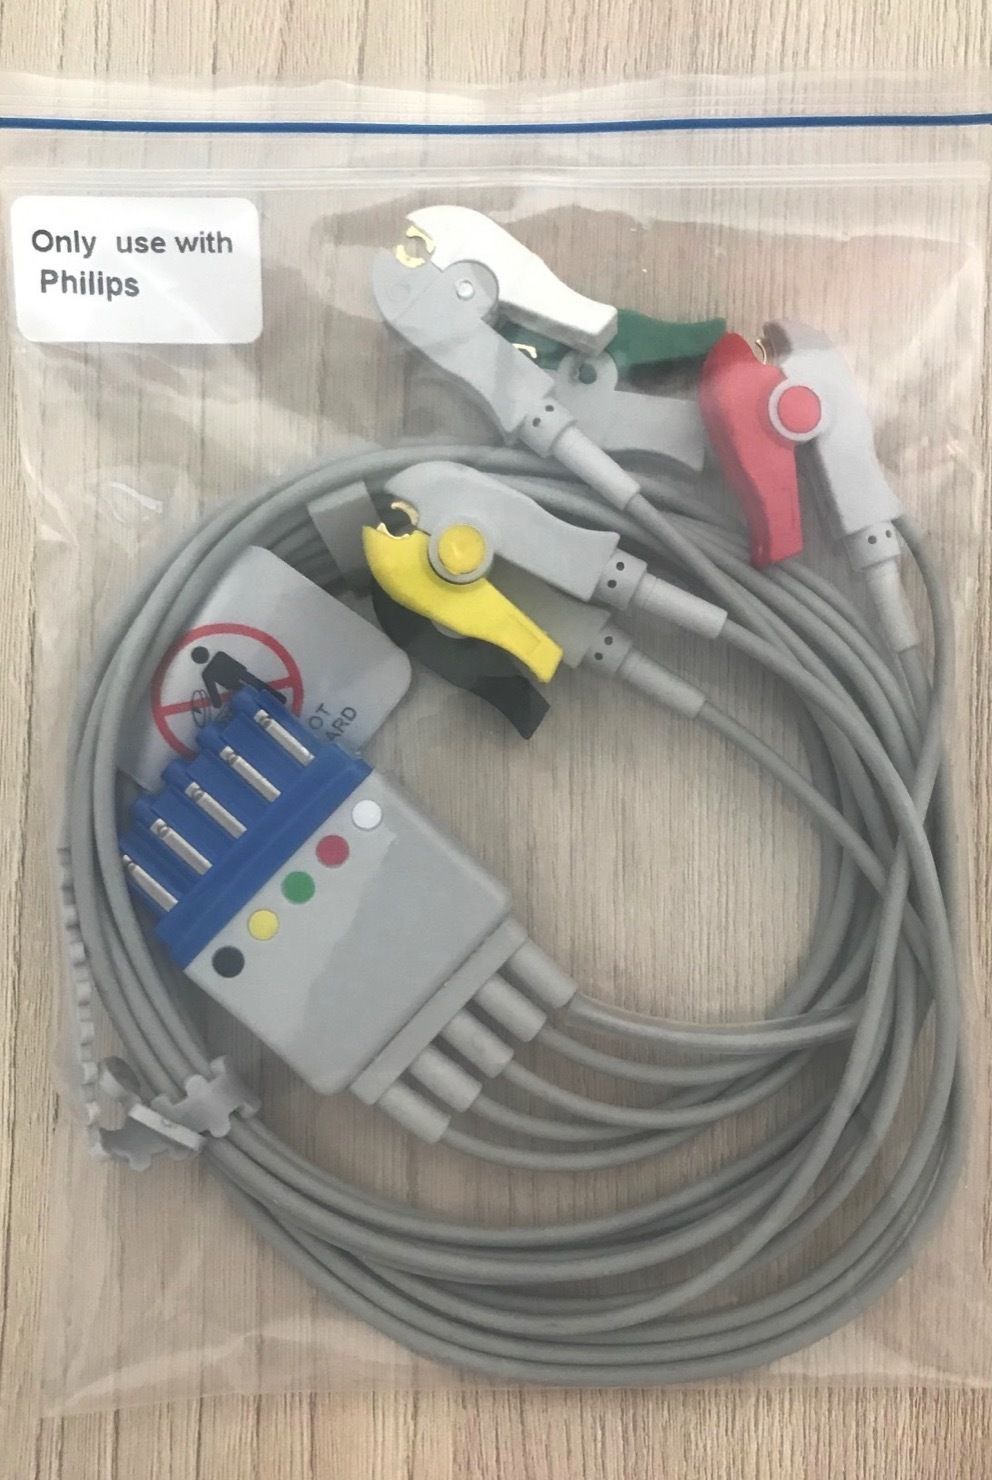 ECG 5 lead wires probe for Philips Bedside patient monitor_สายลีดโพรบแบบ 5 ลีด สำหรับเครื่องมอนิเตอร์ผู้ป่วยฟิลิปส์ Philips